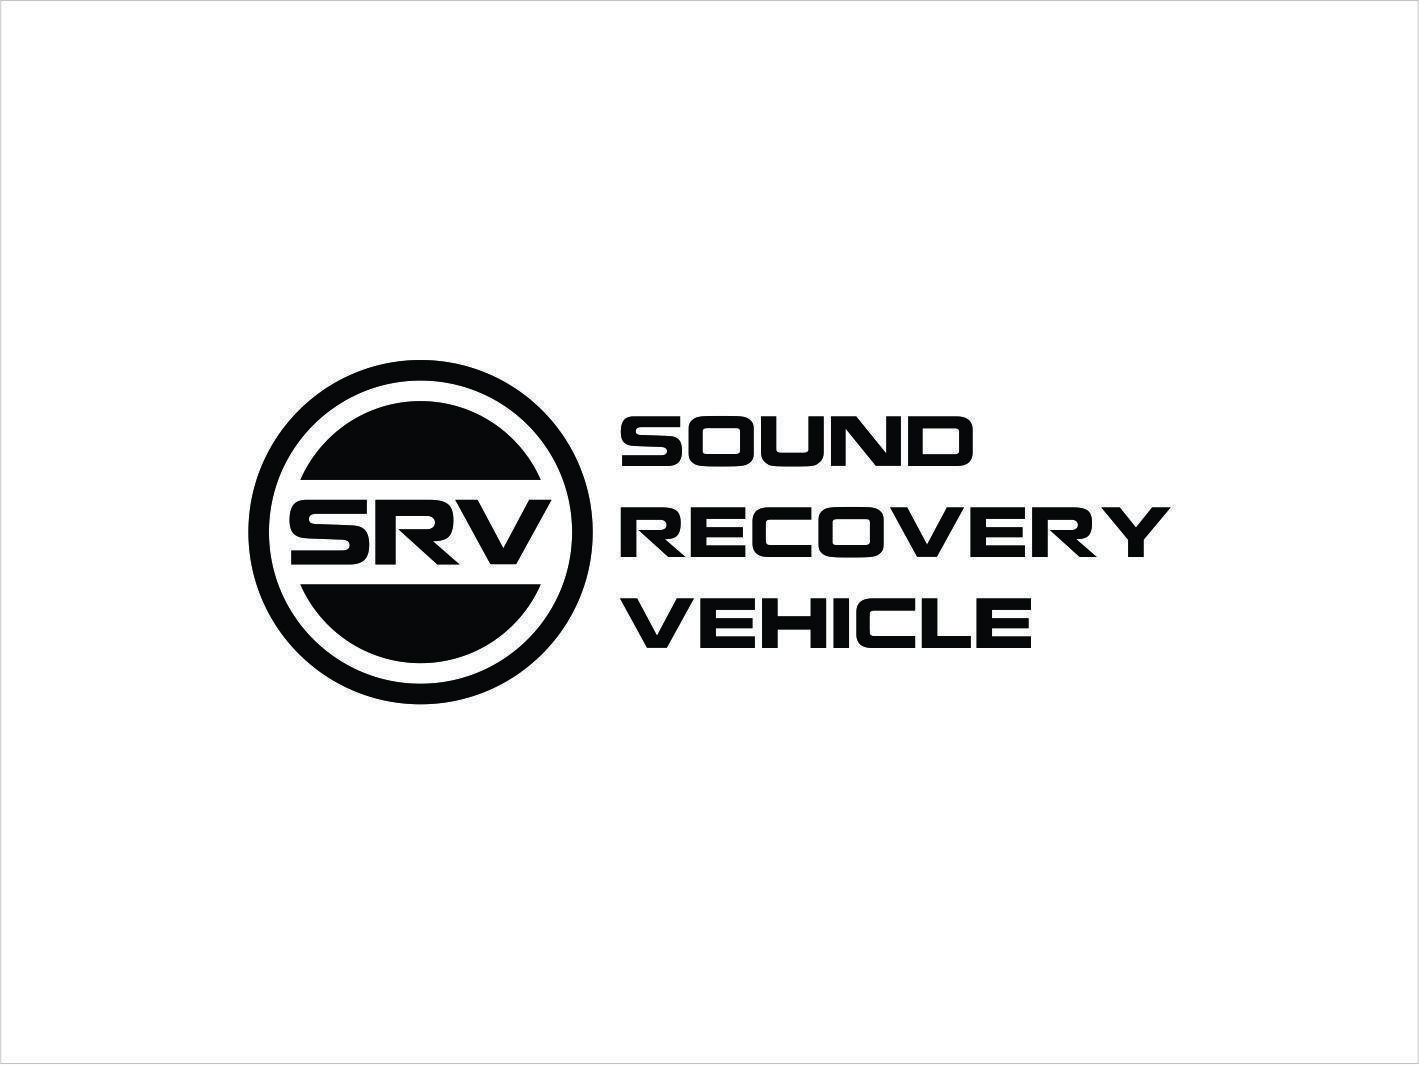 SRV Logo - Logo Design for SRV Sound Recovery Vehicle by LNKstudio | Design ...